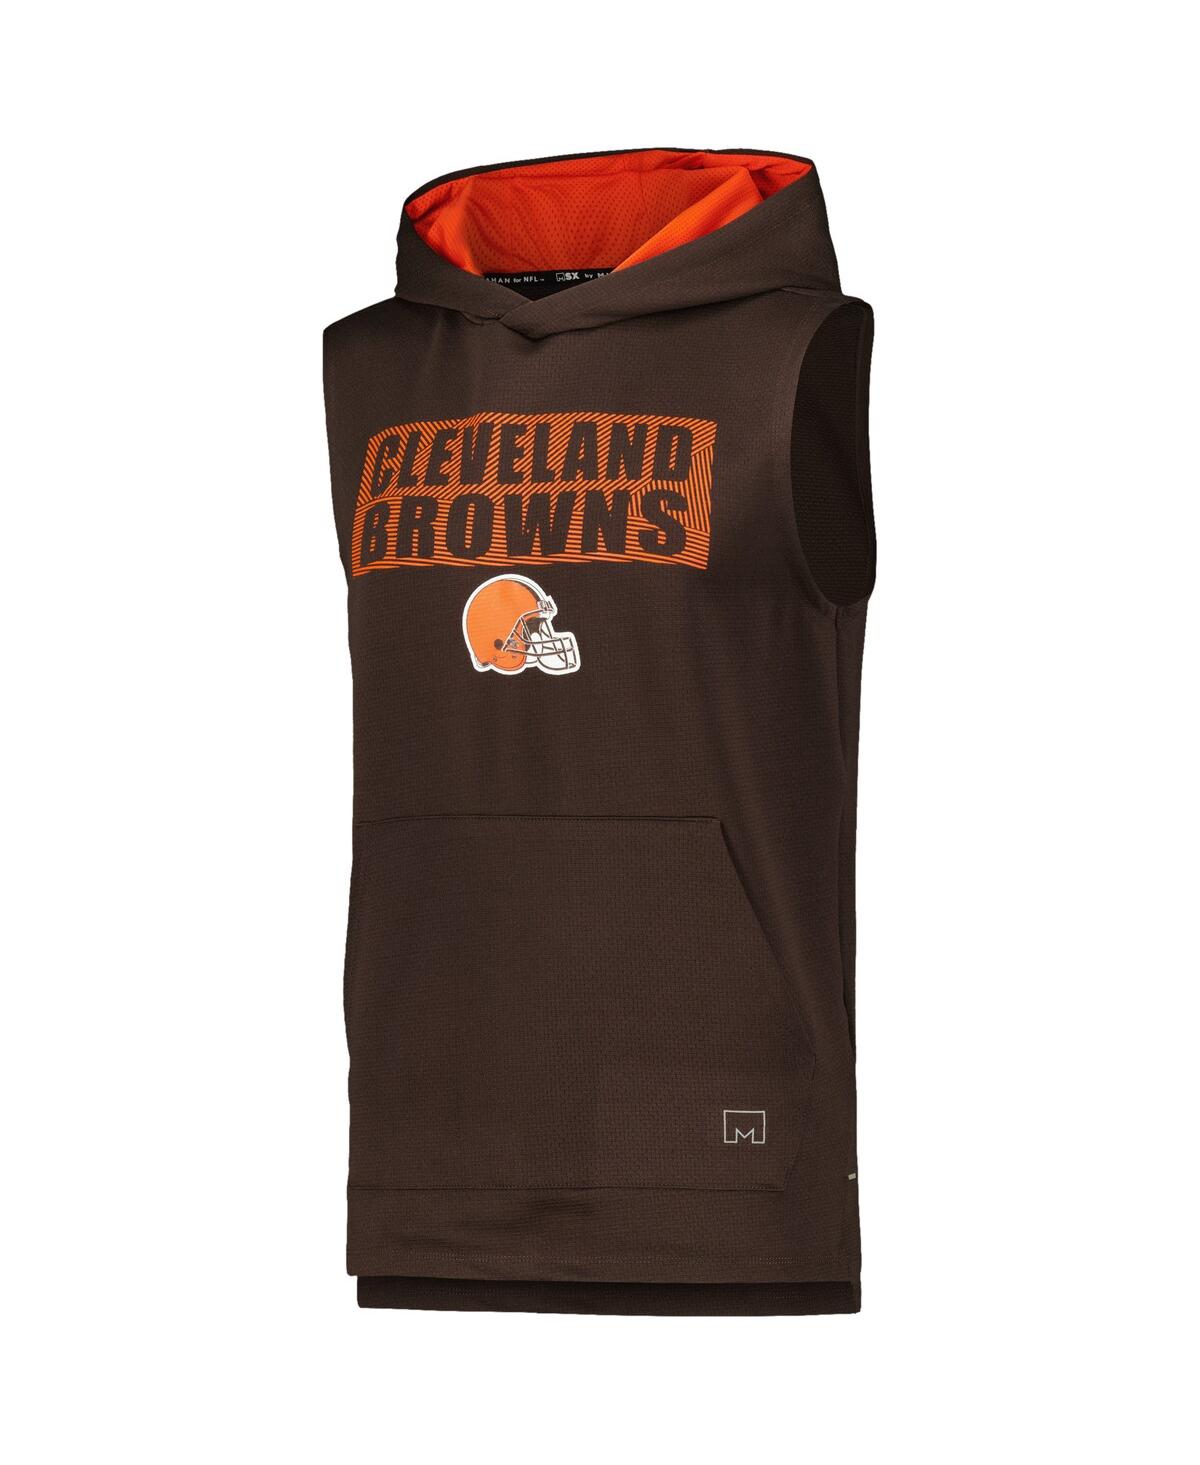 Shop Msx By Michael Strahan Men's  Brown Cleveland Browns Marathon Sleeveless Pullover Hoodie